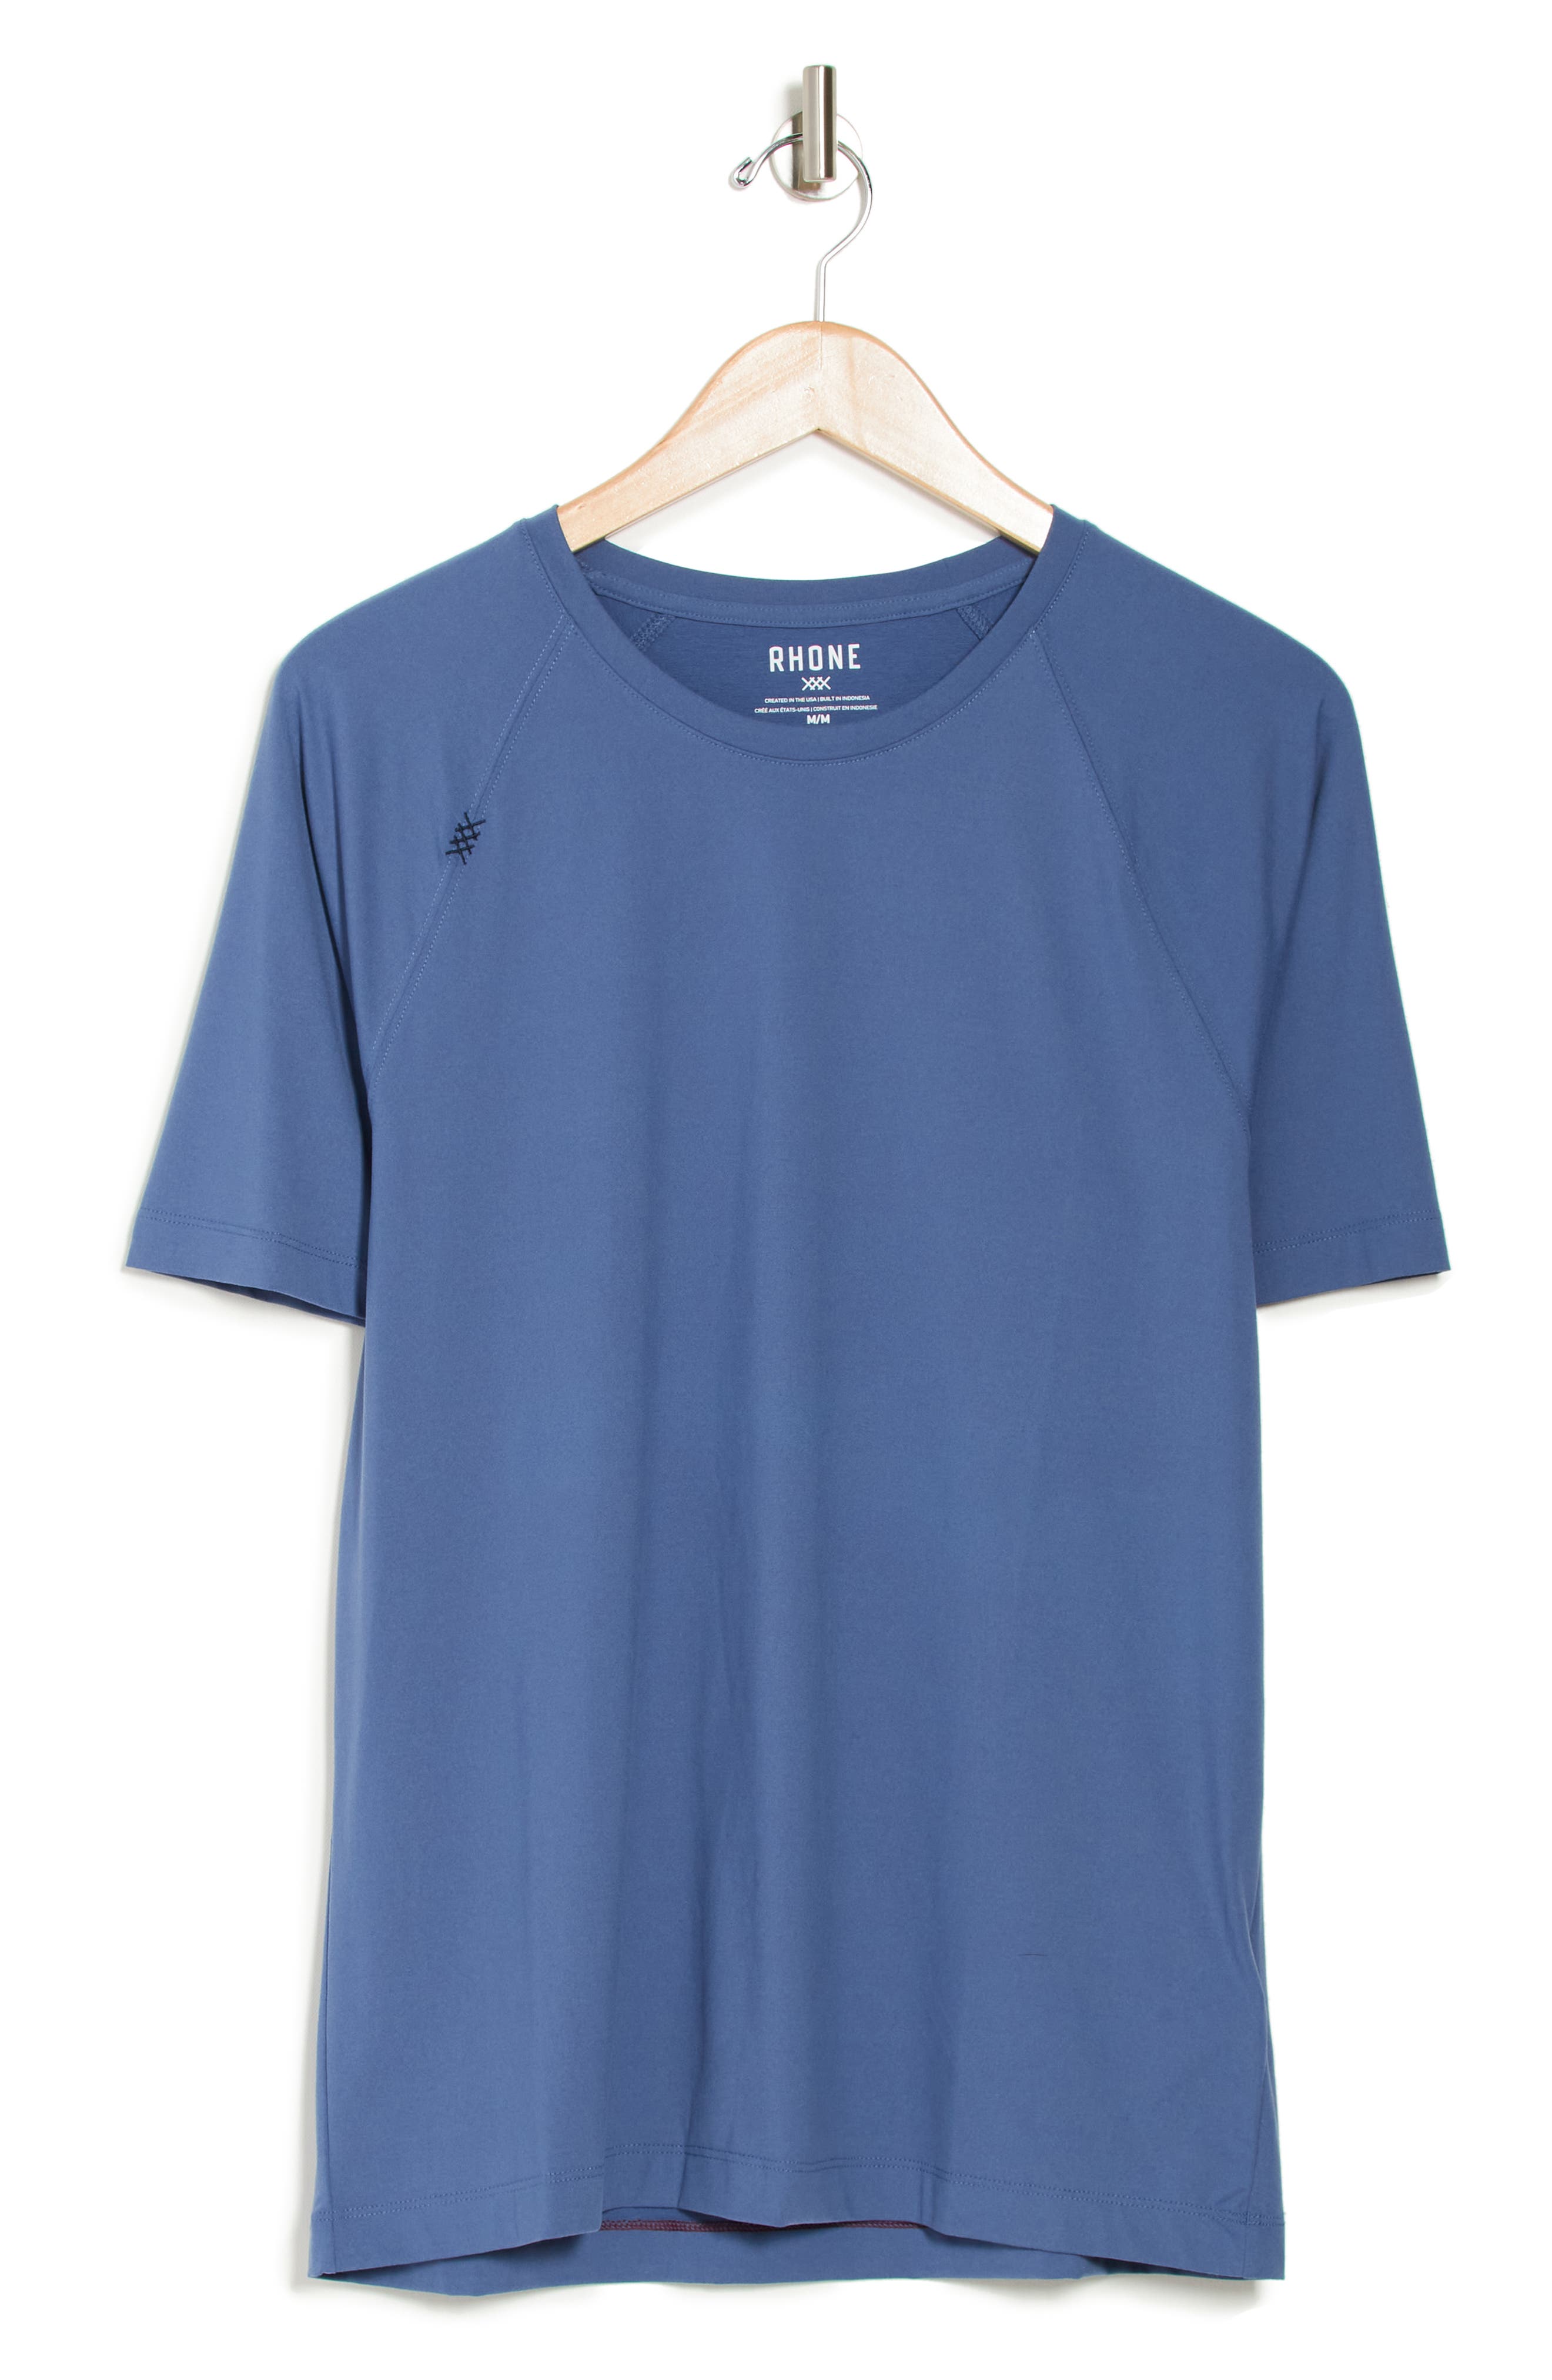 Rhone Reign Performance T-shirt In Bijou Blue